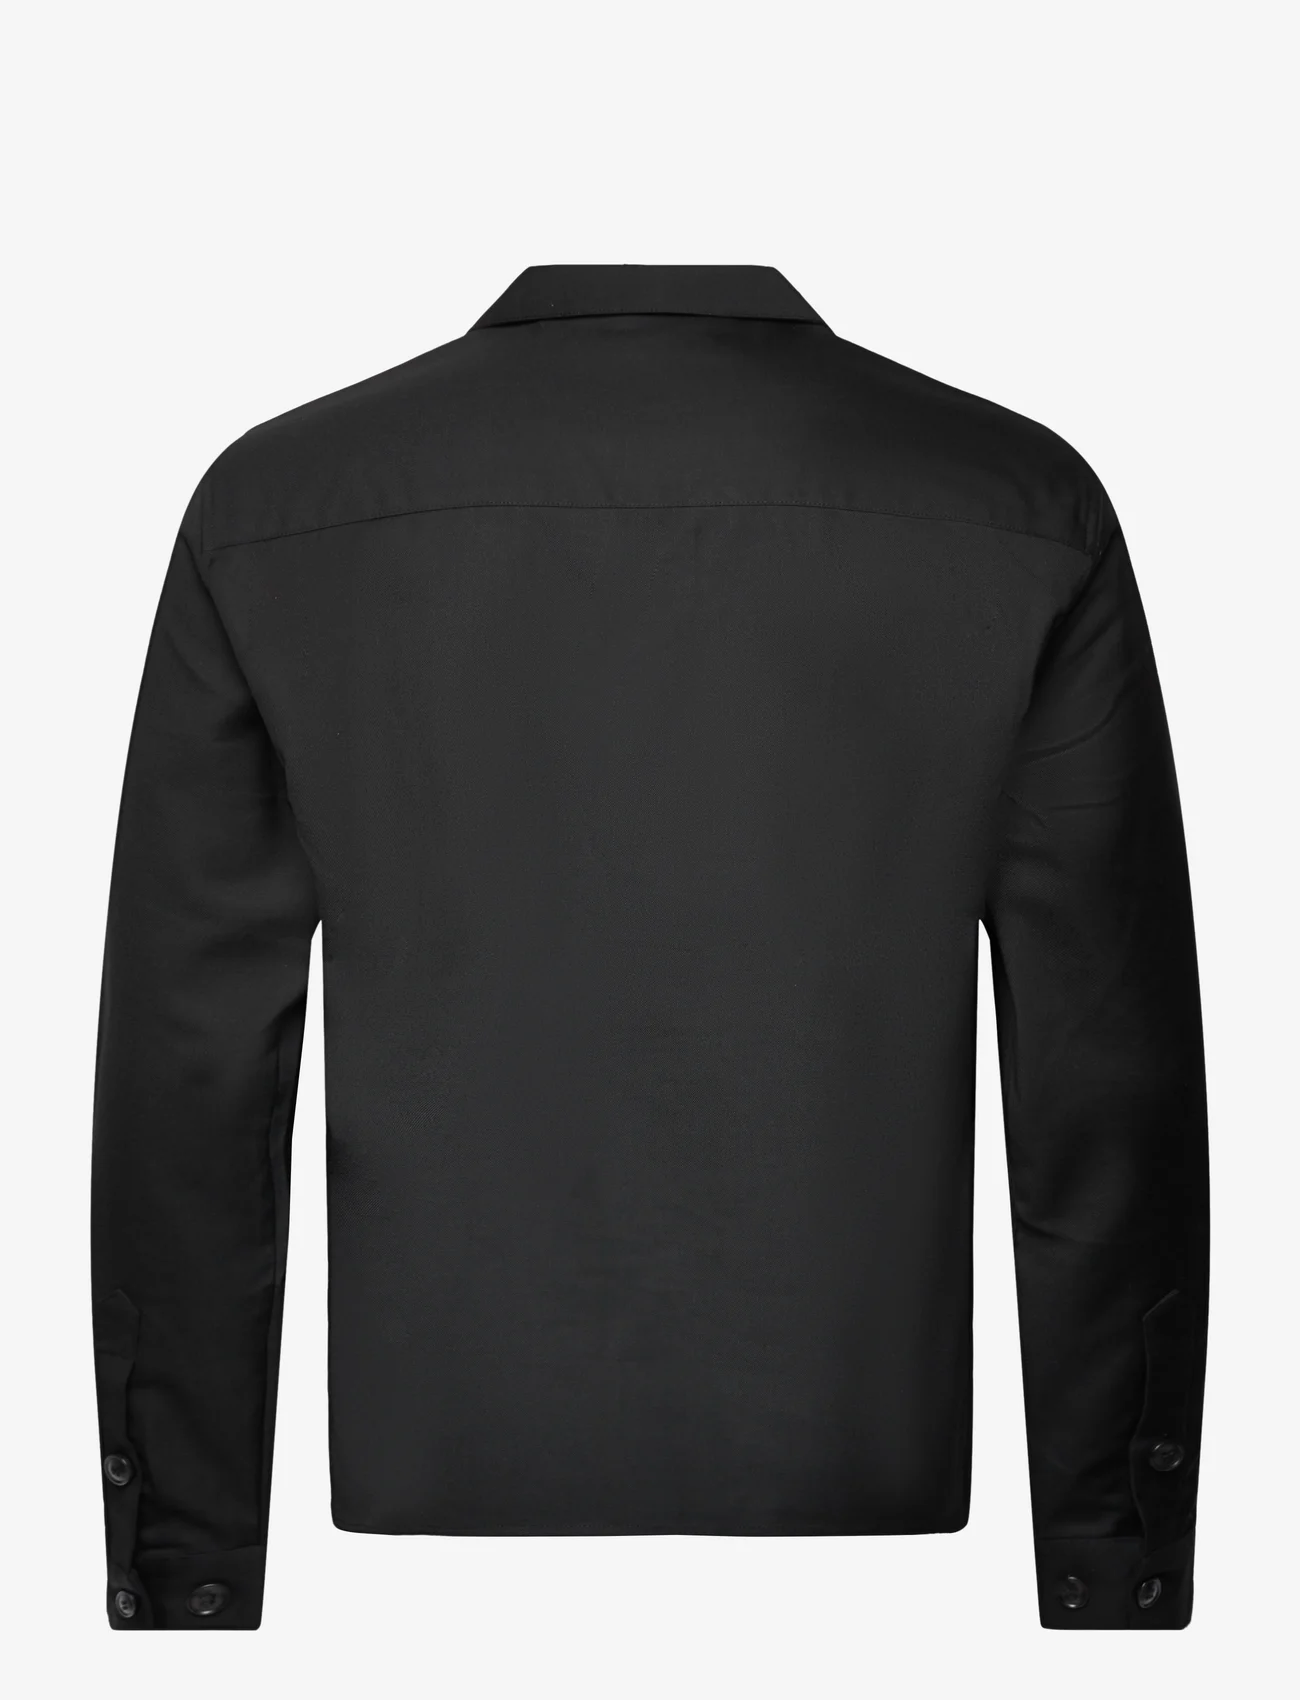 Bruuns Bazaar - MicksBBStone jacket - mehed - black - 1